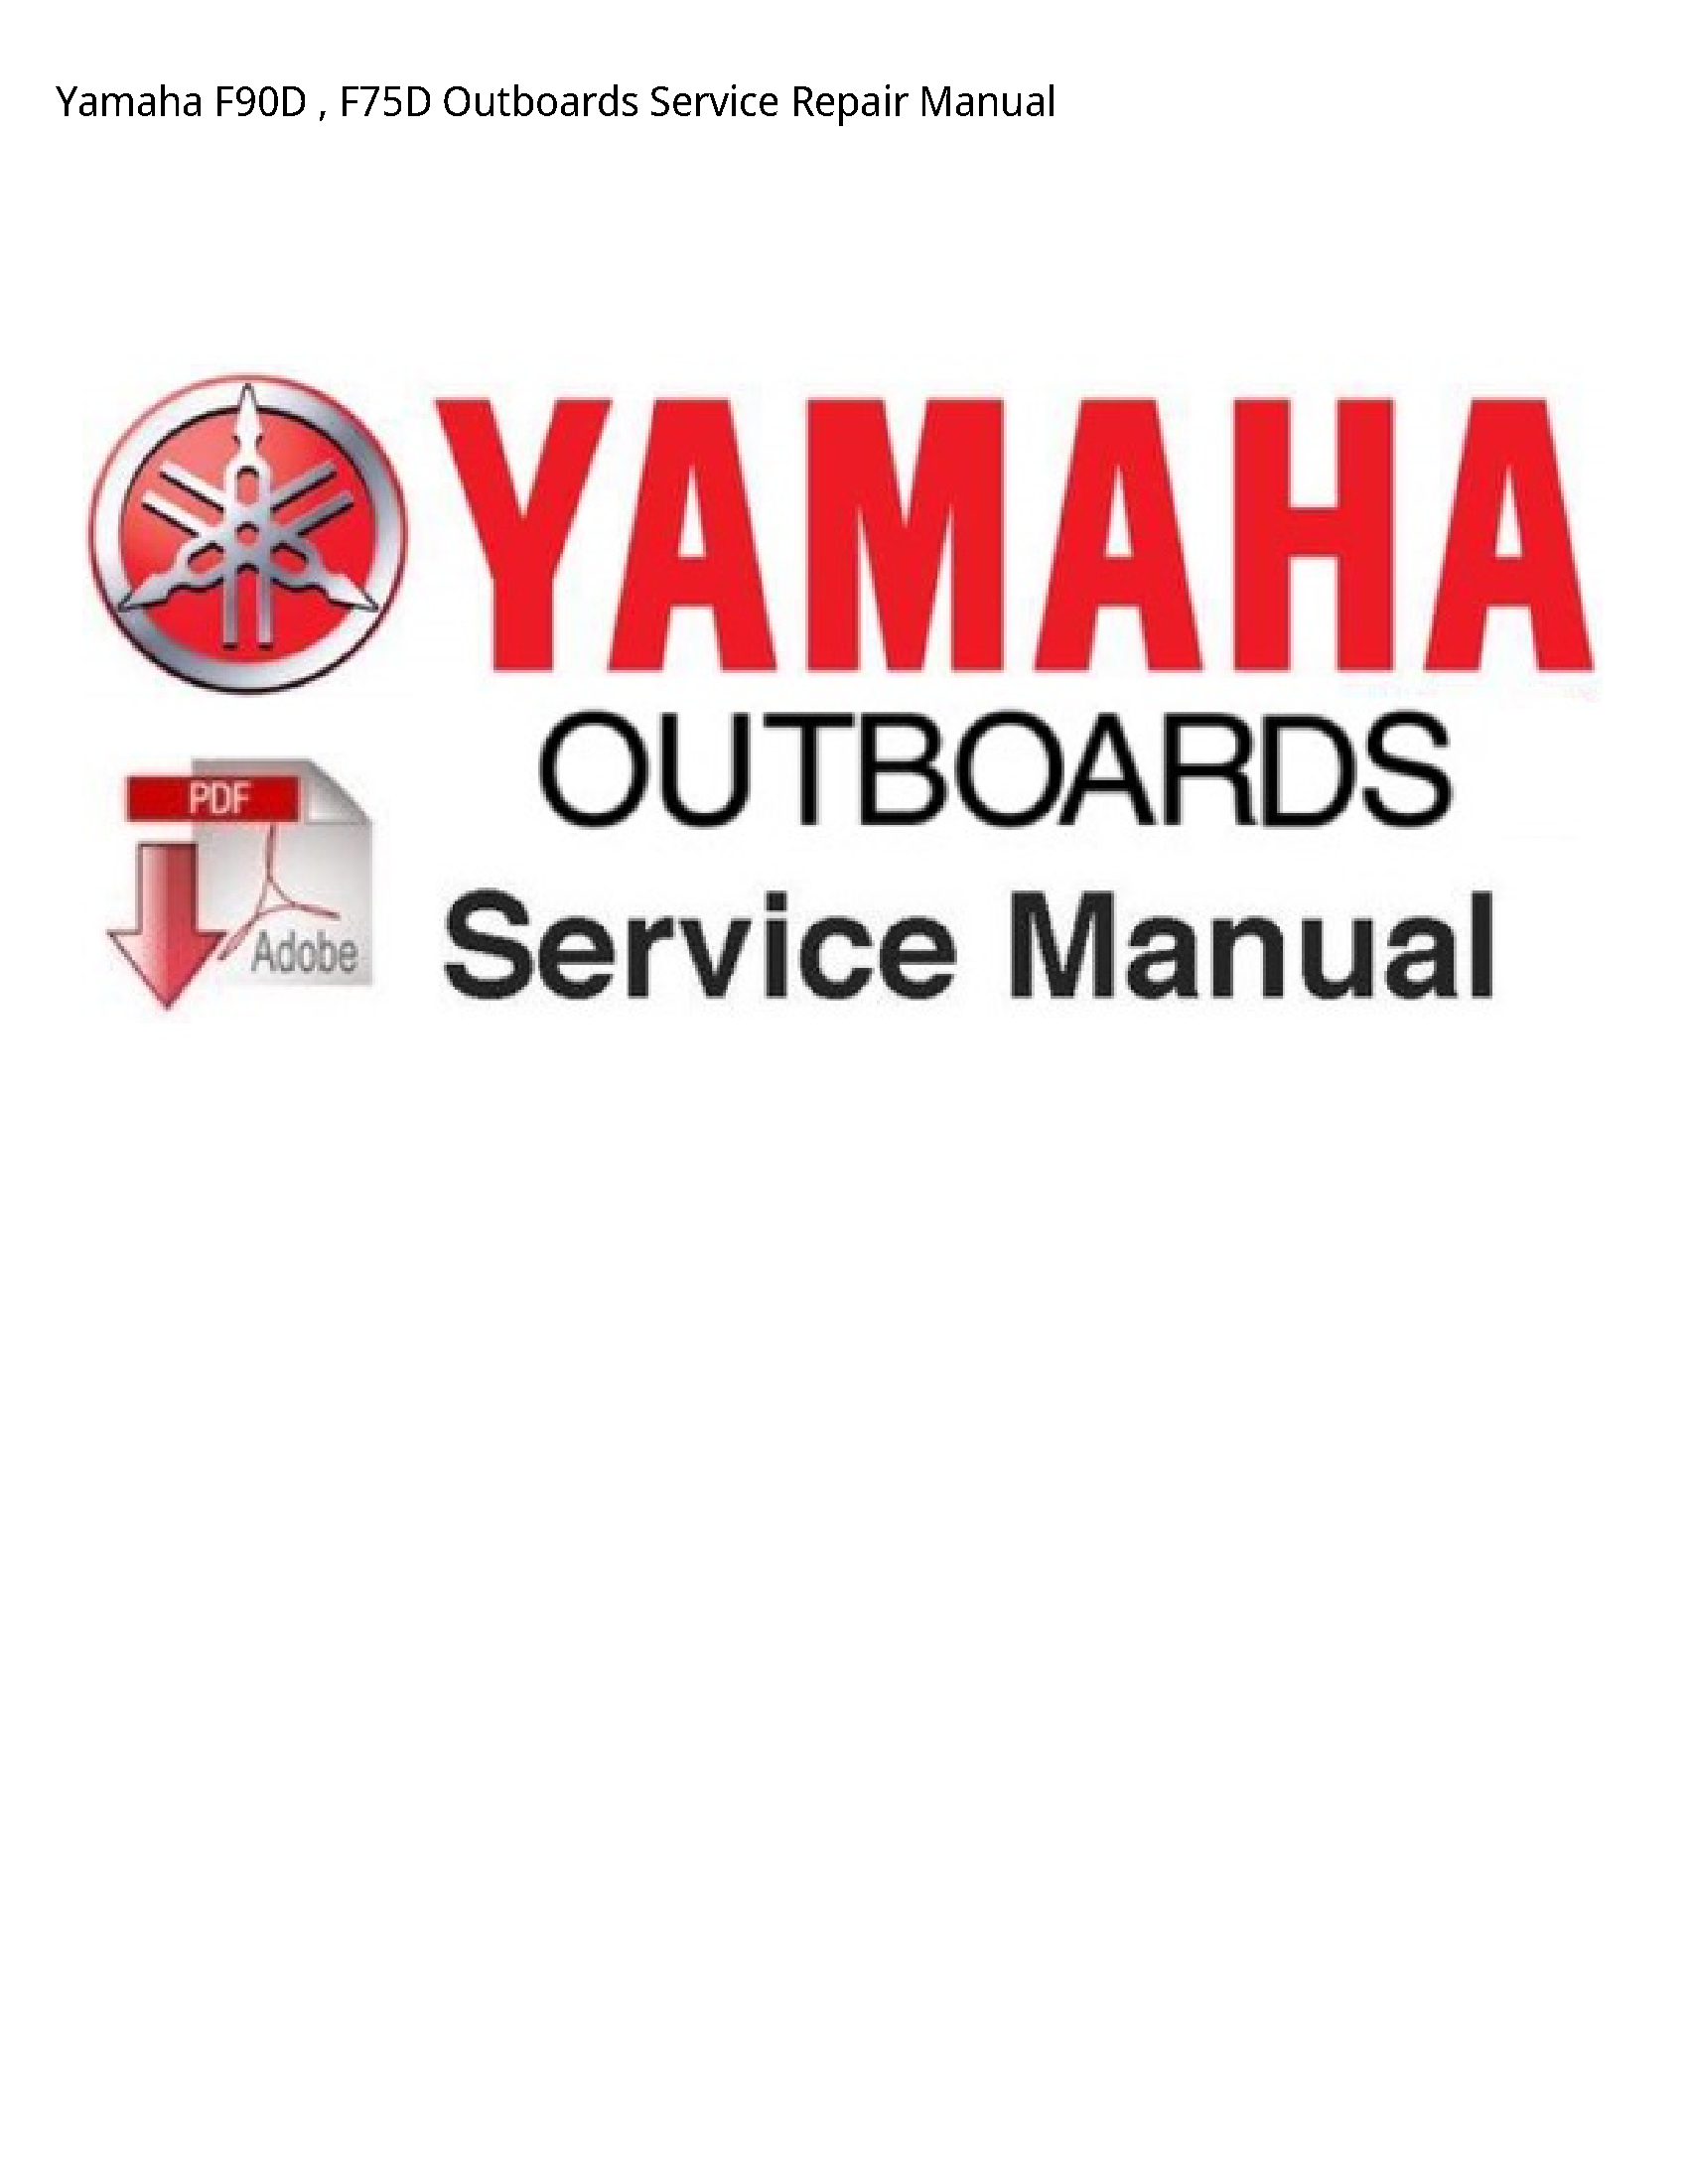 Yamaha F90D Outboards manual